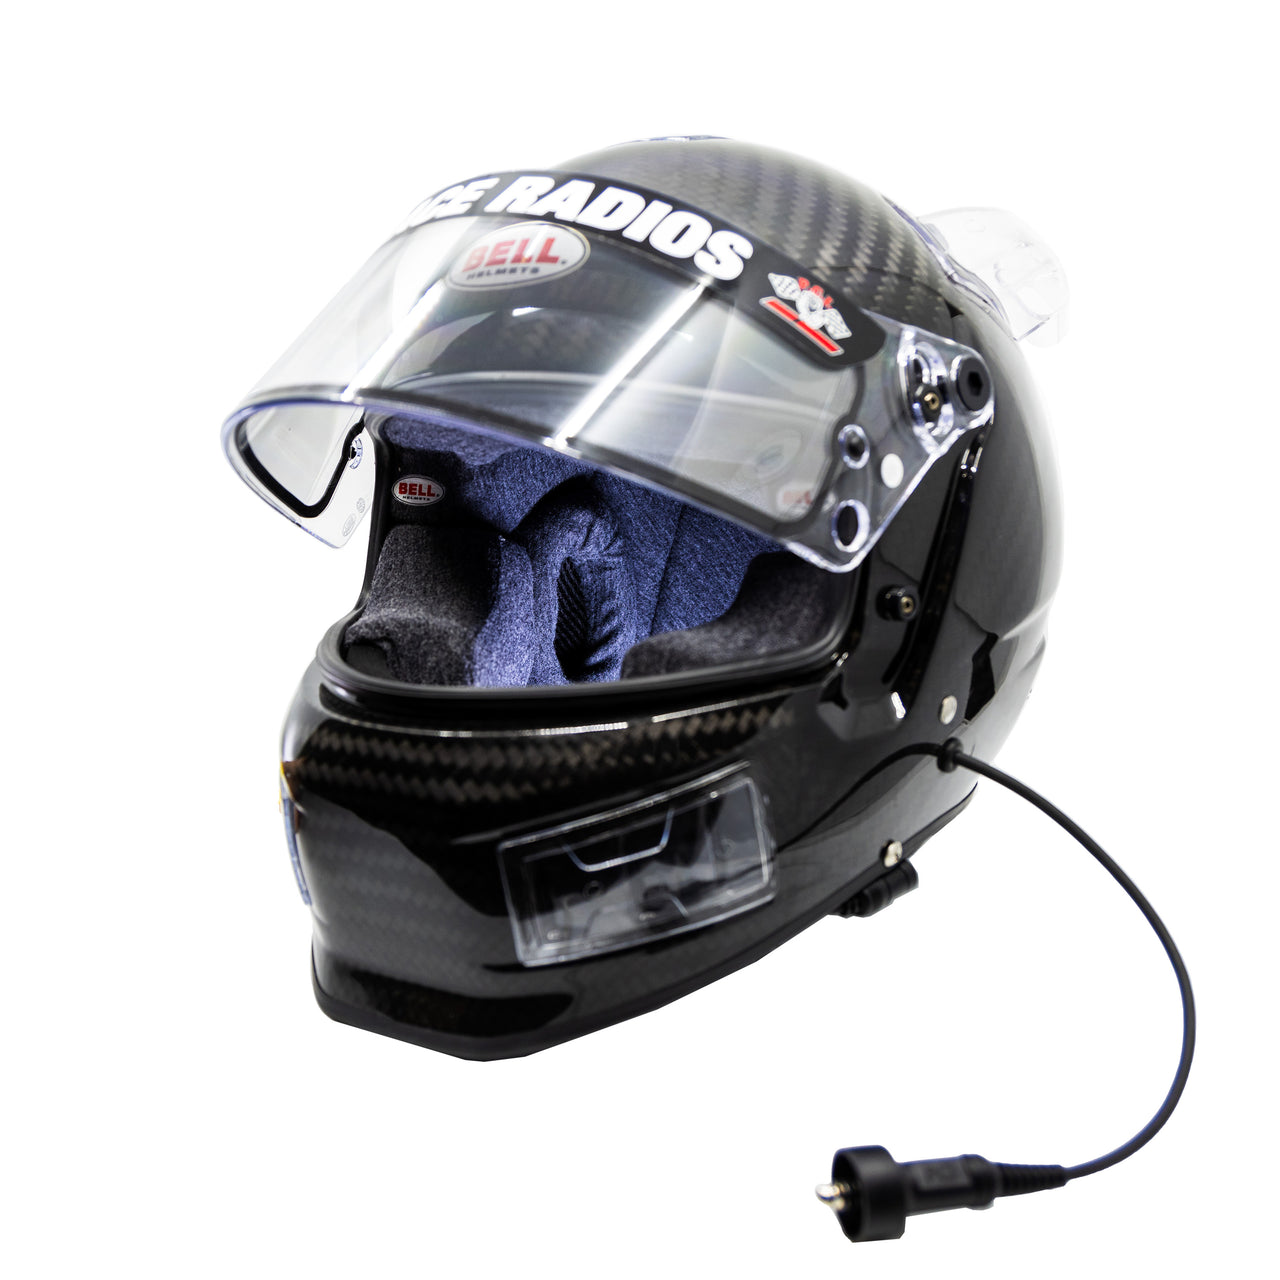 Bell BR8 Carbon helmet